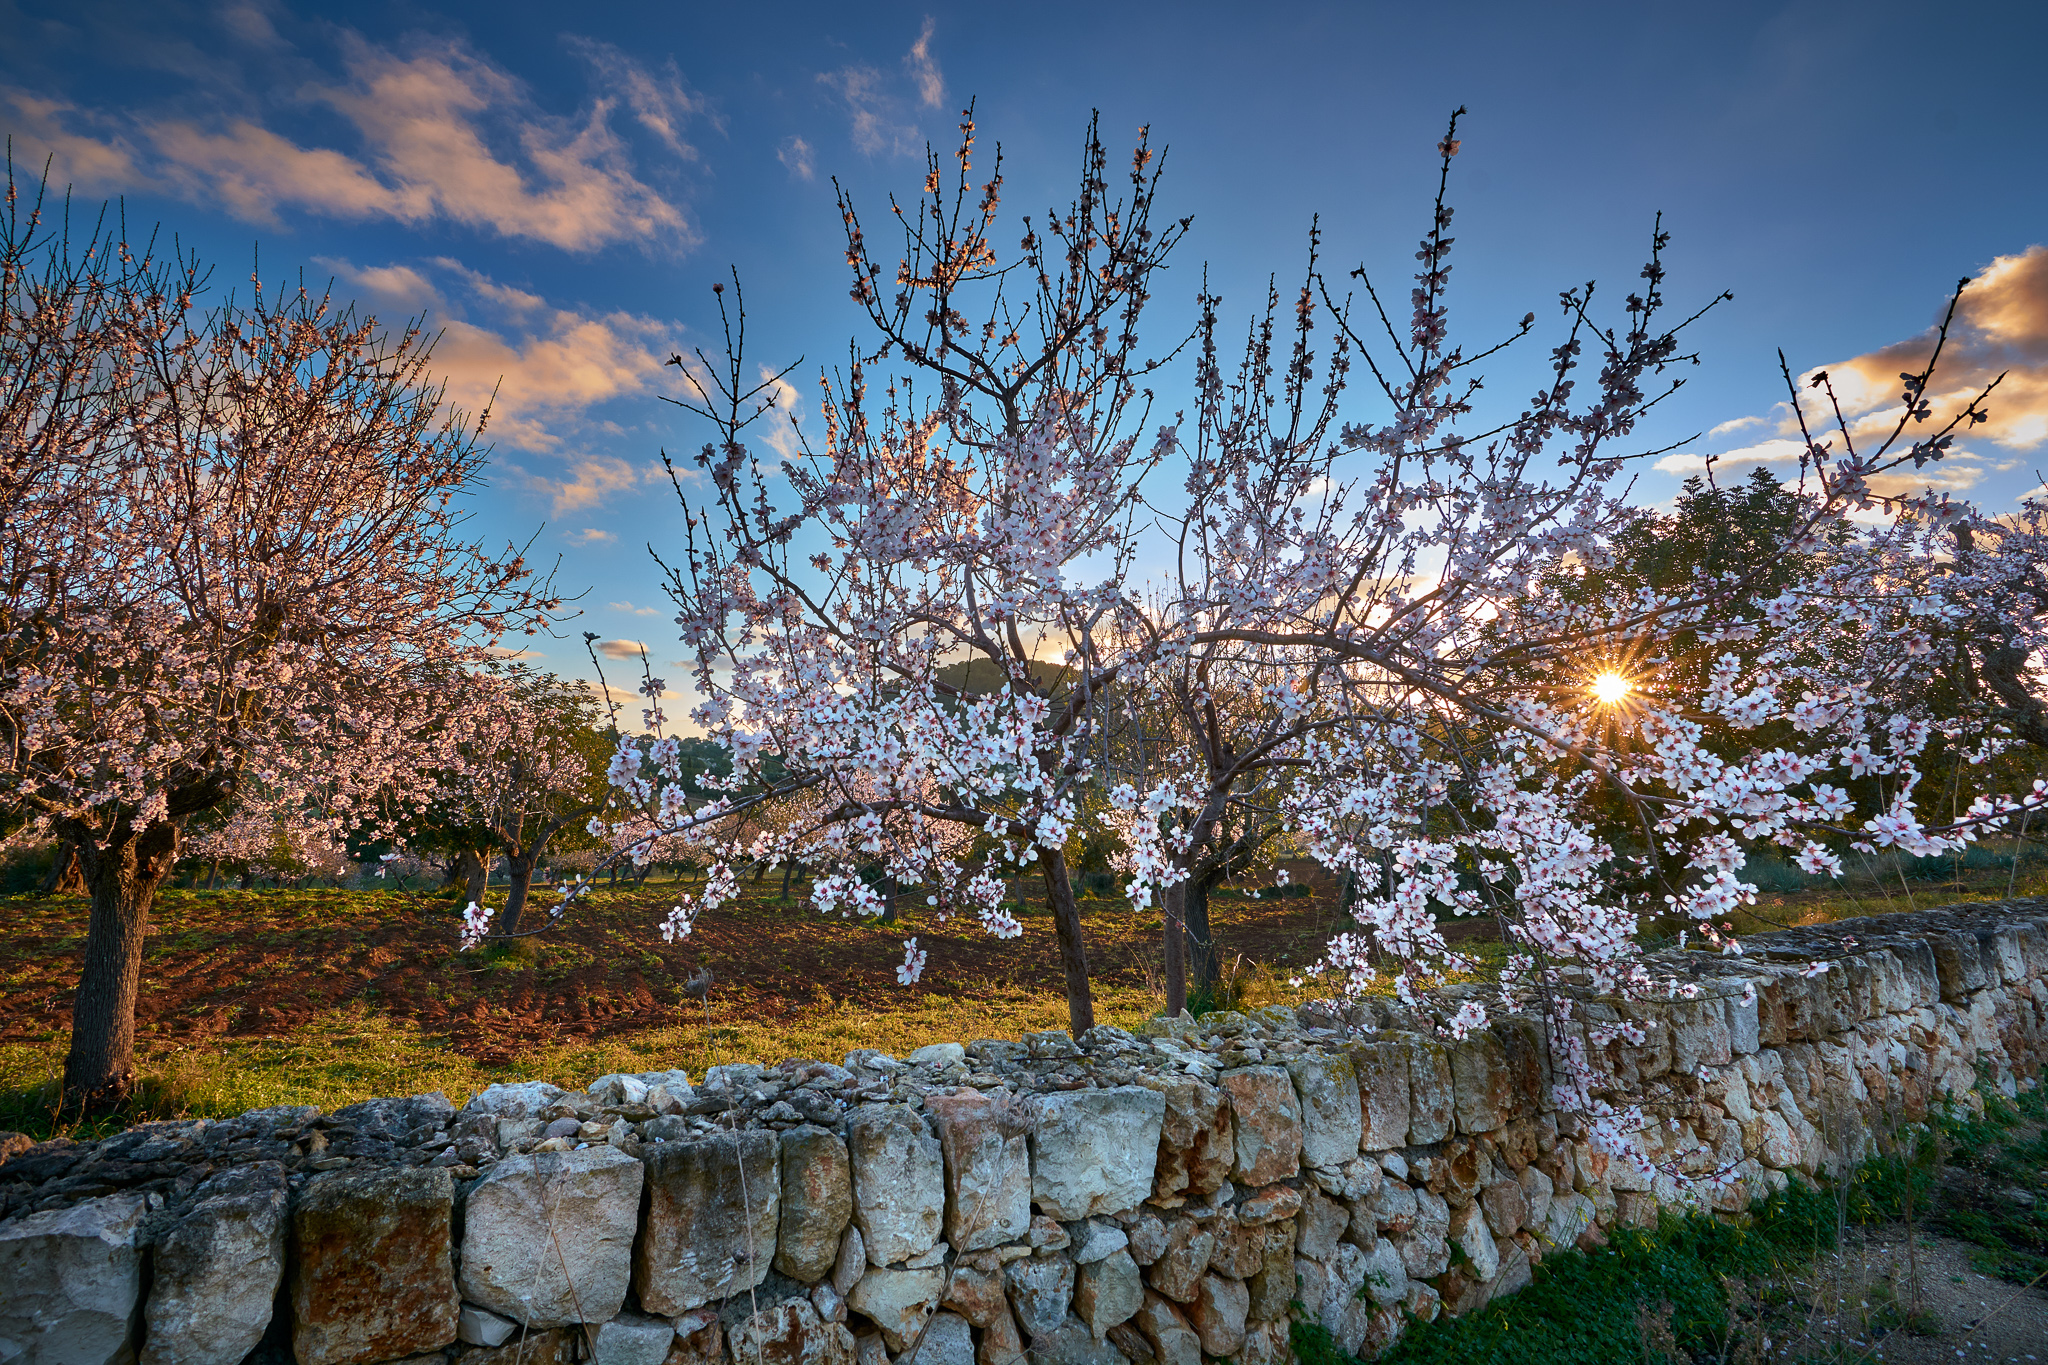 Almond trees near a stone wall